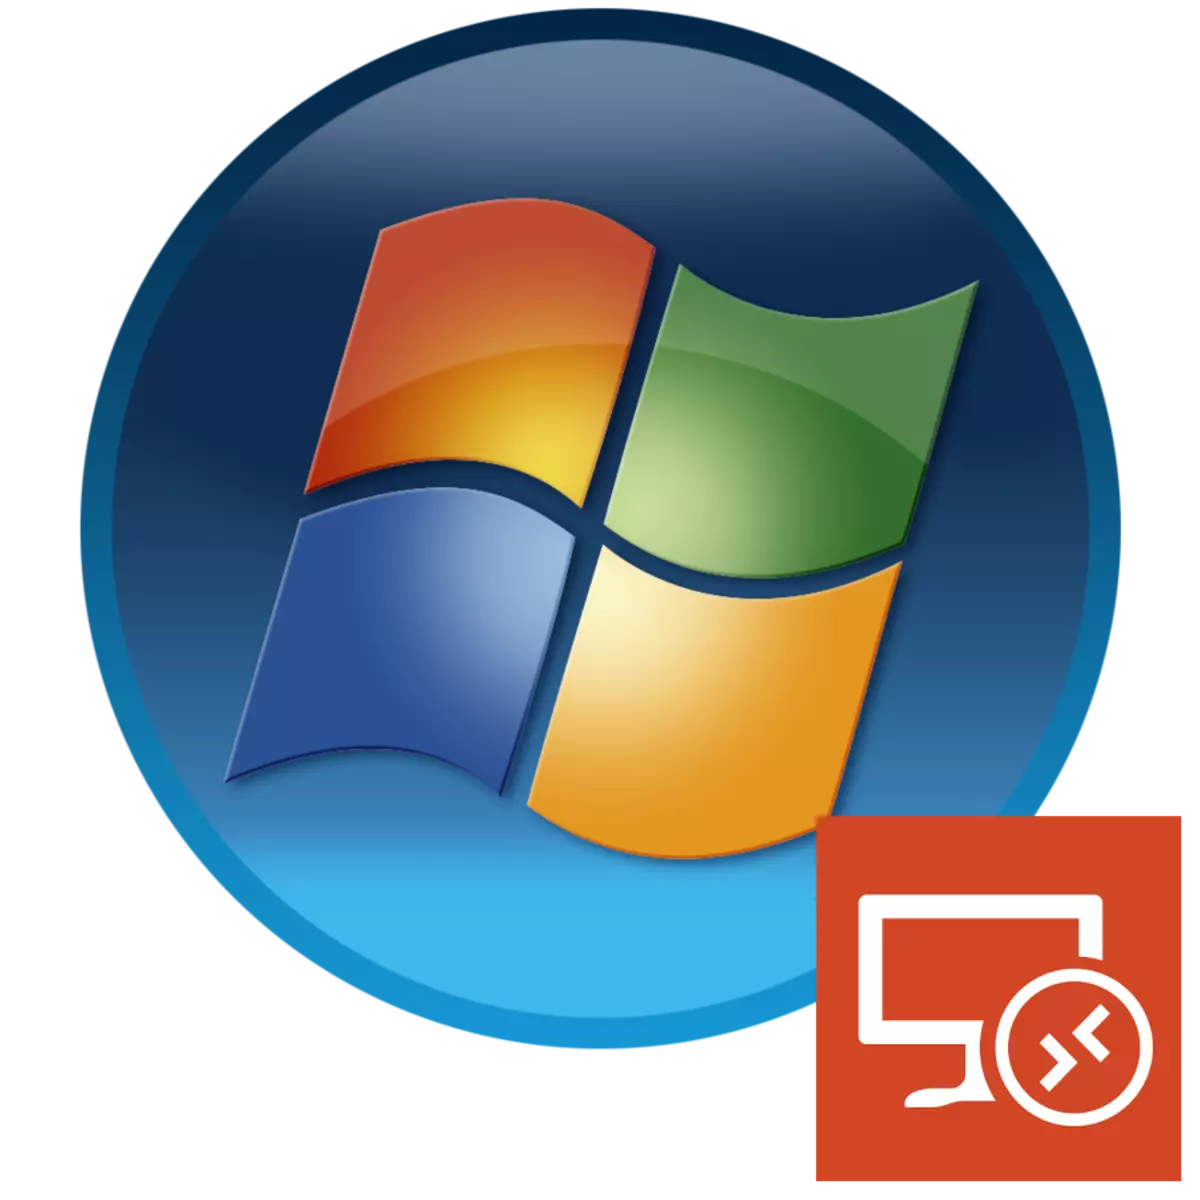 RDP 8 lossis RDP 8.1 Hauv Windows 7